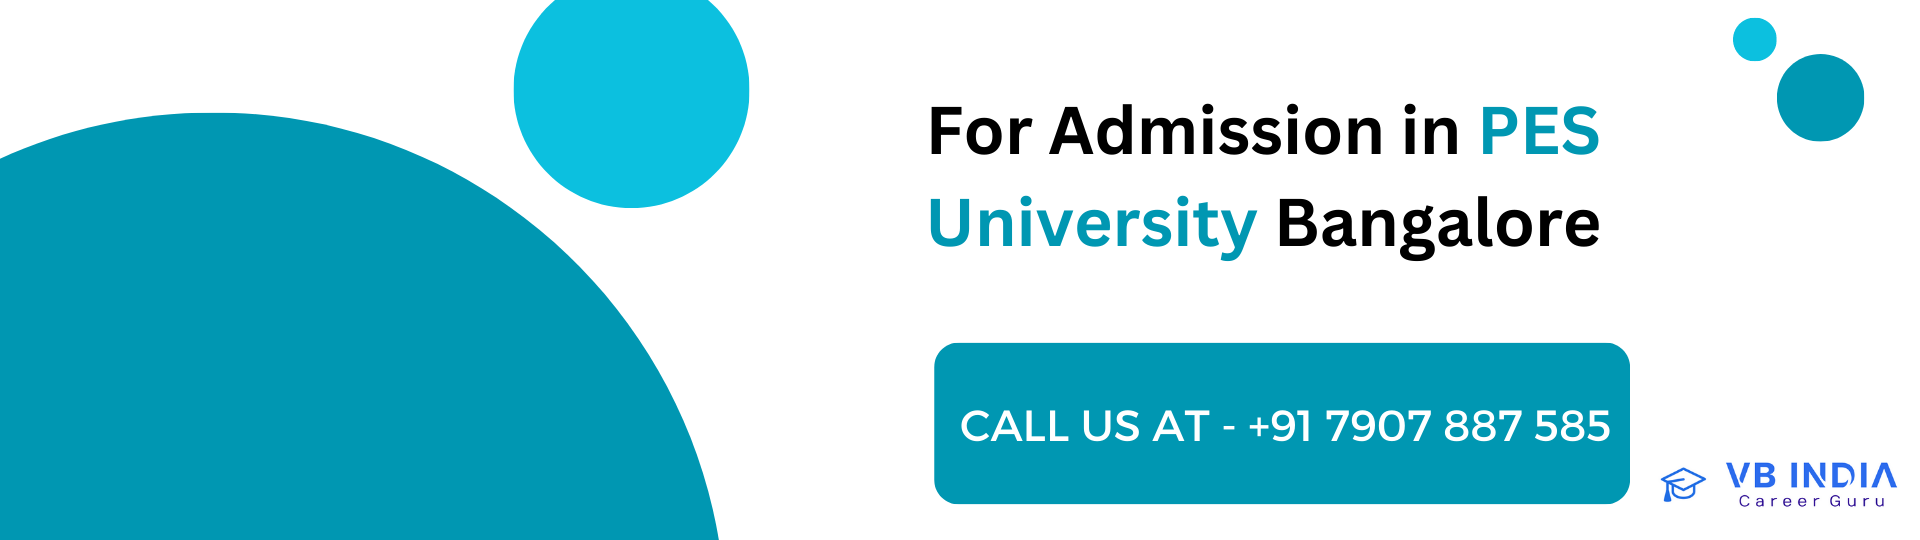 PES-University-admissions